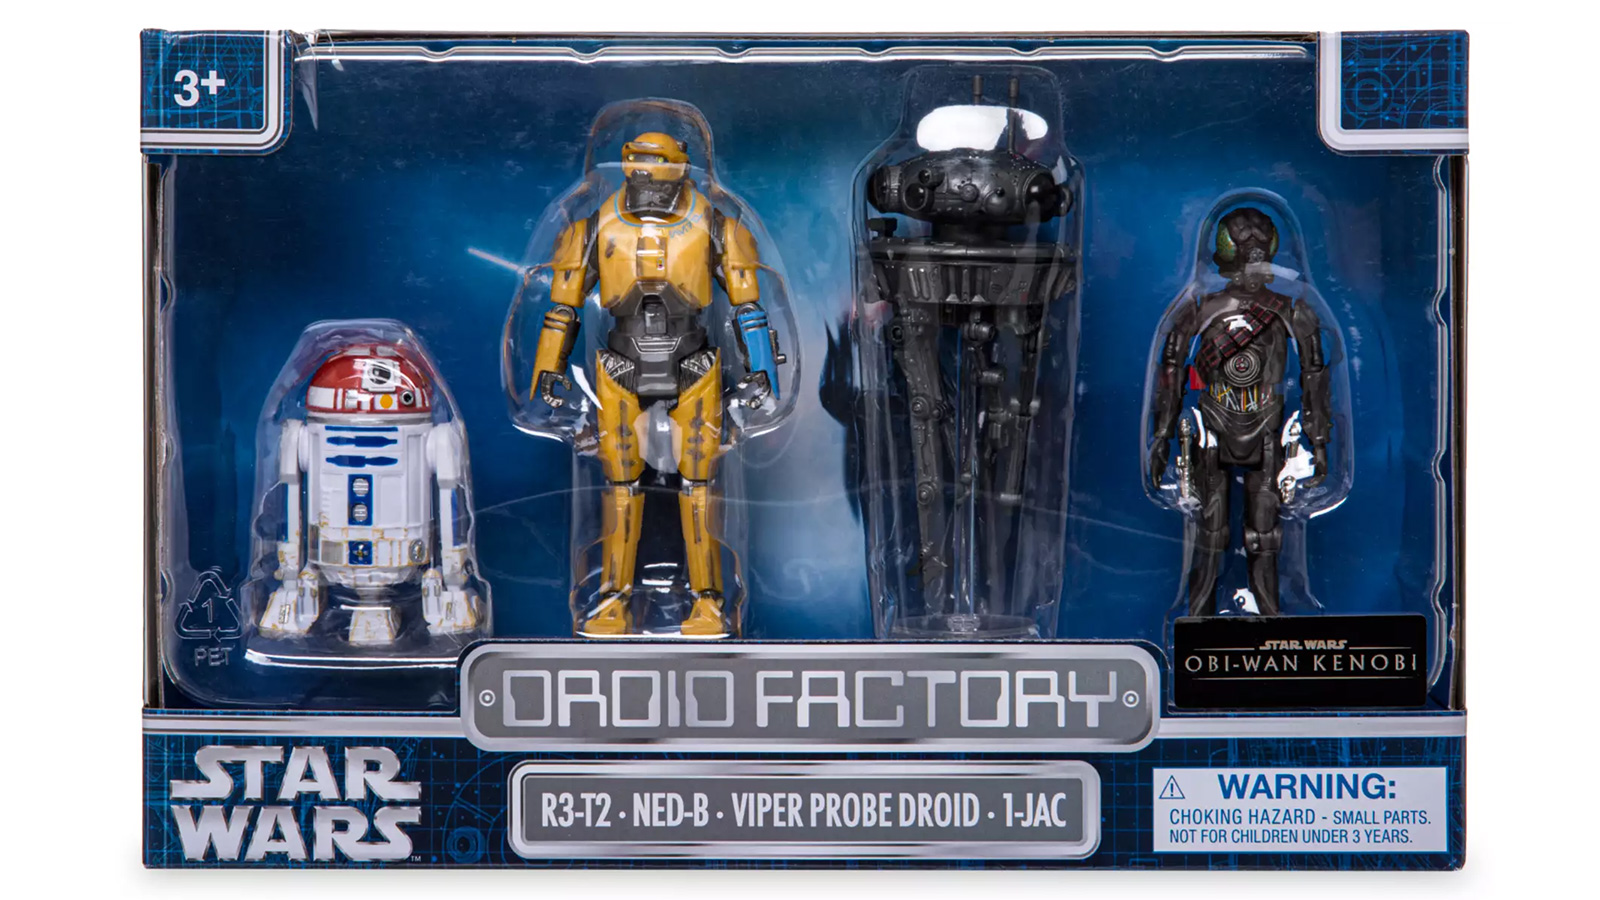 In Stock At Shop Disney - Exclusive Droid Factory Obi-Wan Kenobi Droid Set